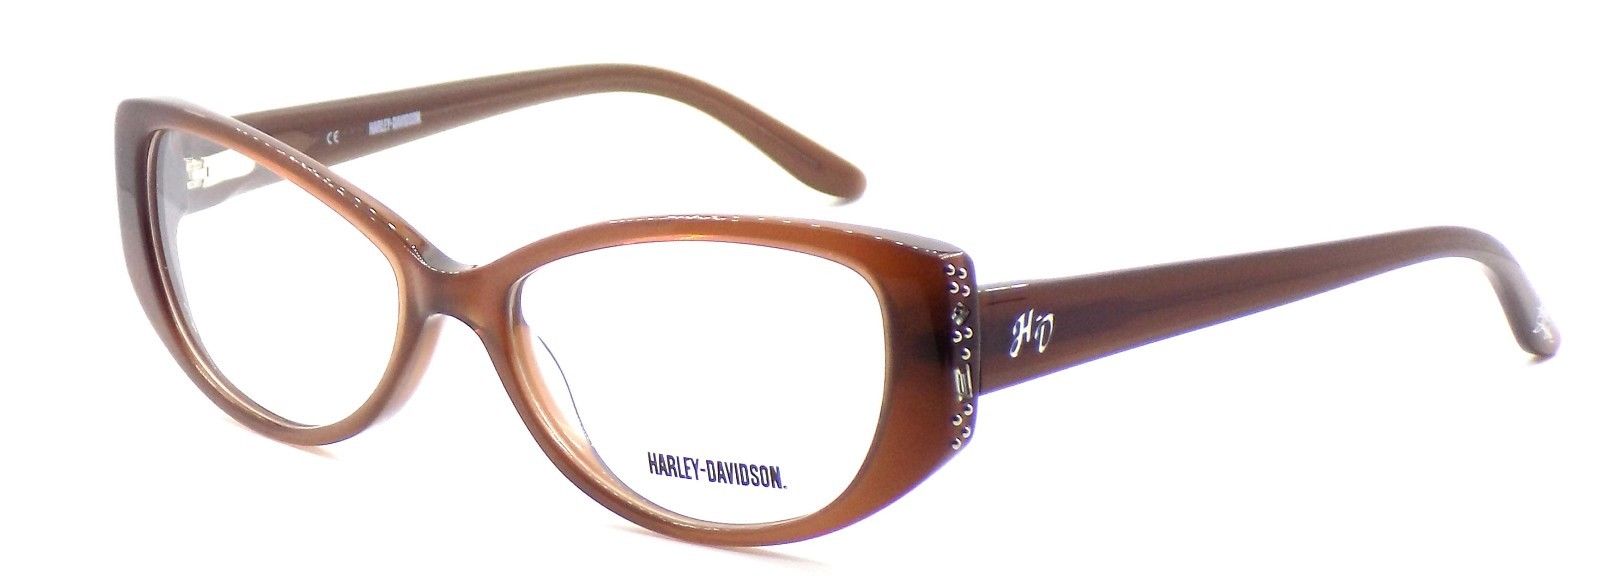 1-Harley Davidson HD514 BRN Women's Eyeglasses Frames 51-15-135 Brown + CASE-715583766464-IKSpecs